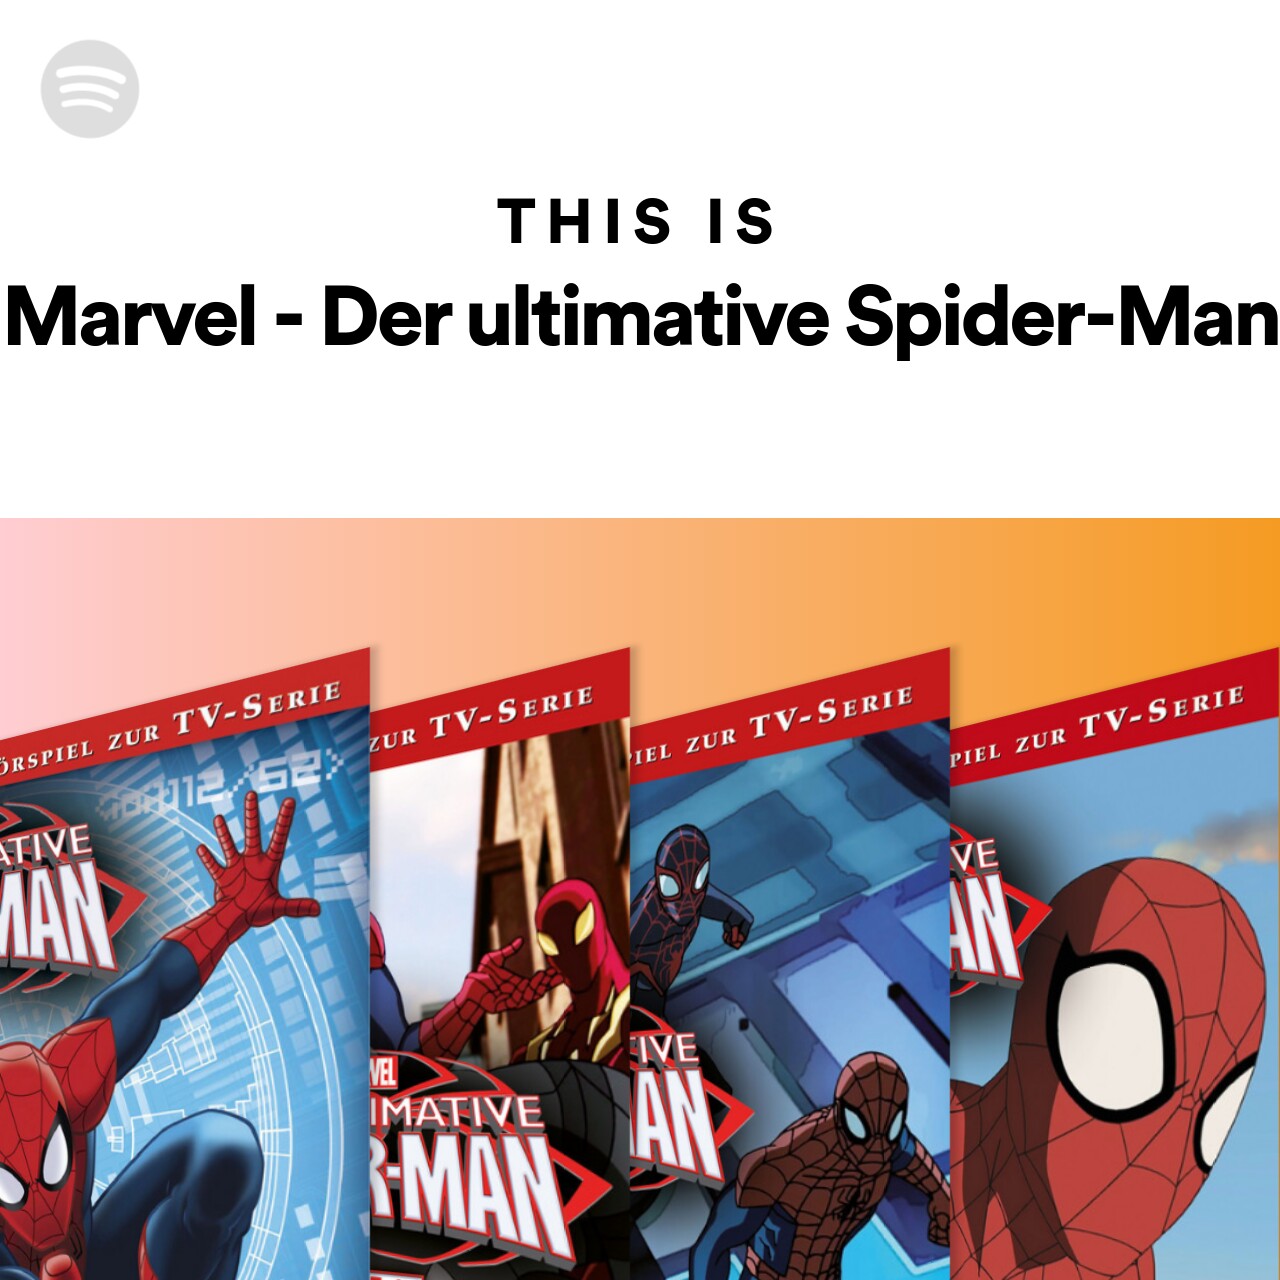 This Is Marvel - Der ultimative Spider-Man